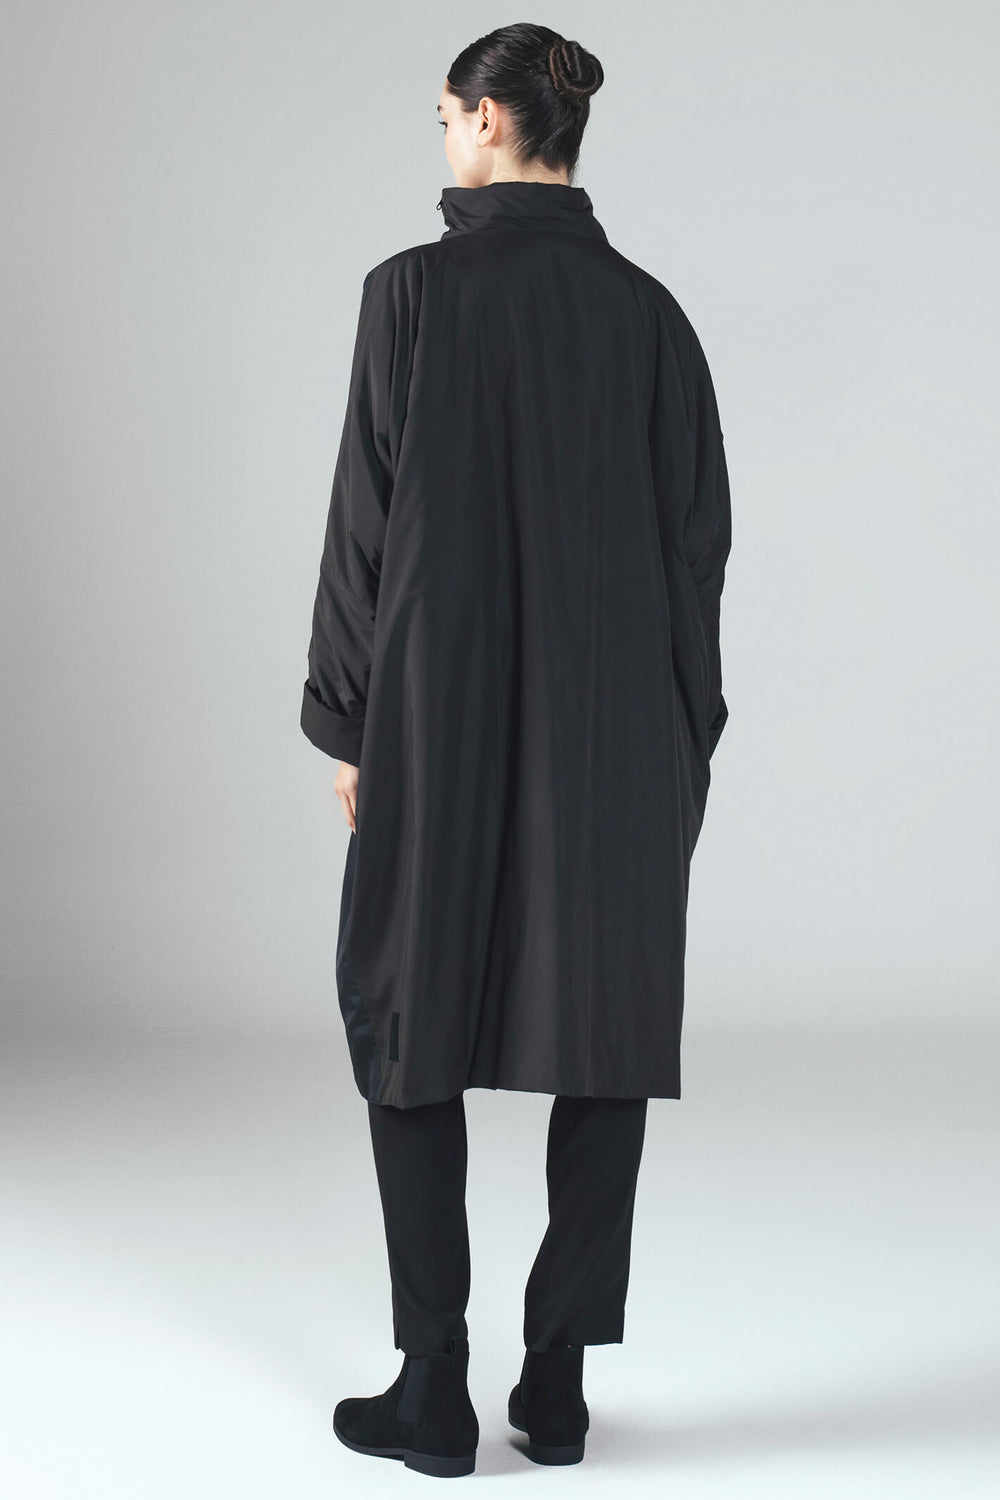 Igor W23-57 Spain Black Multicolour Print Zip Front Coat - Experience Boutique